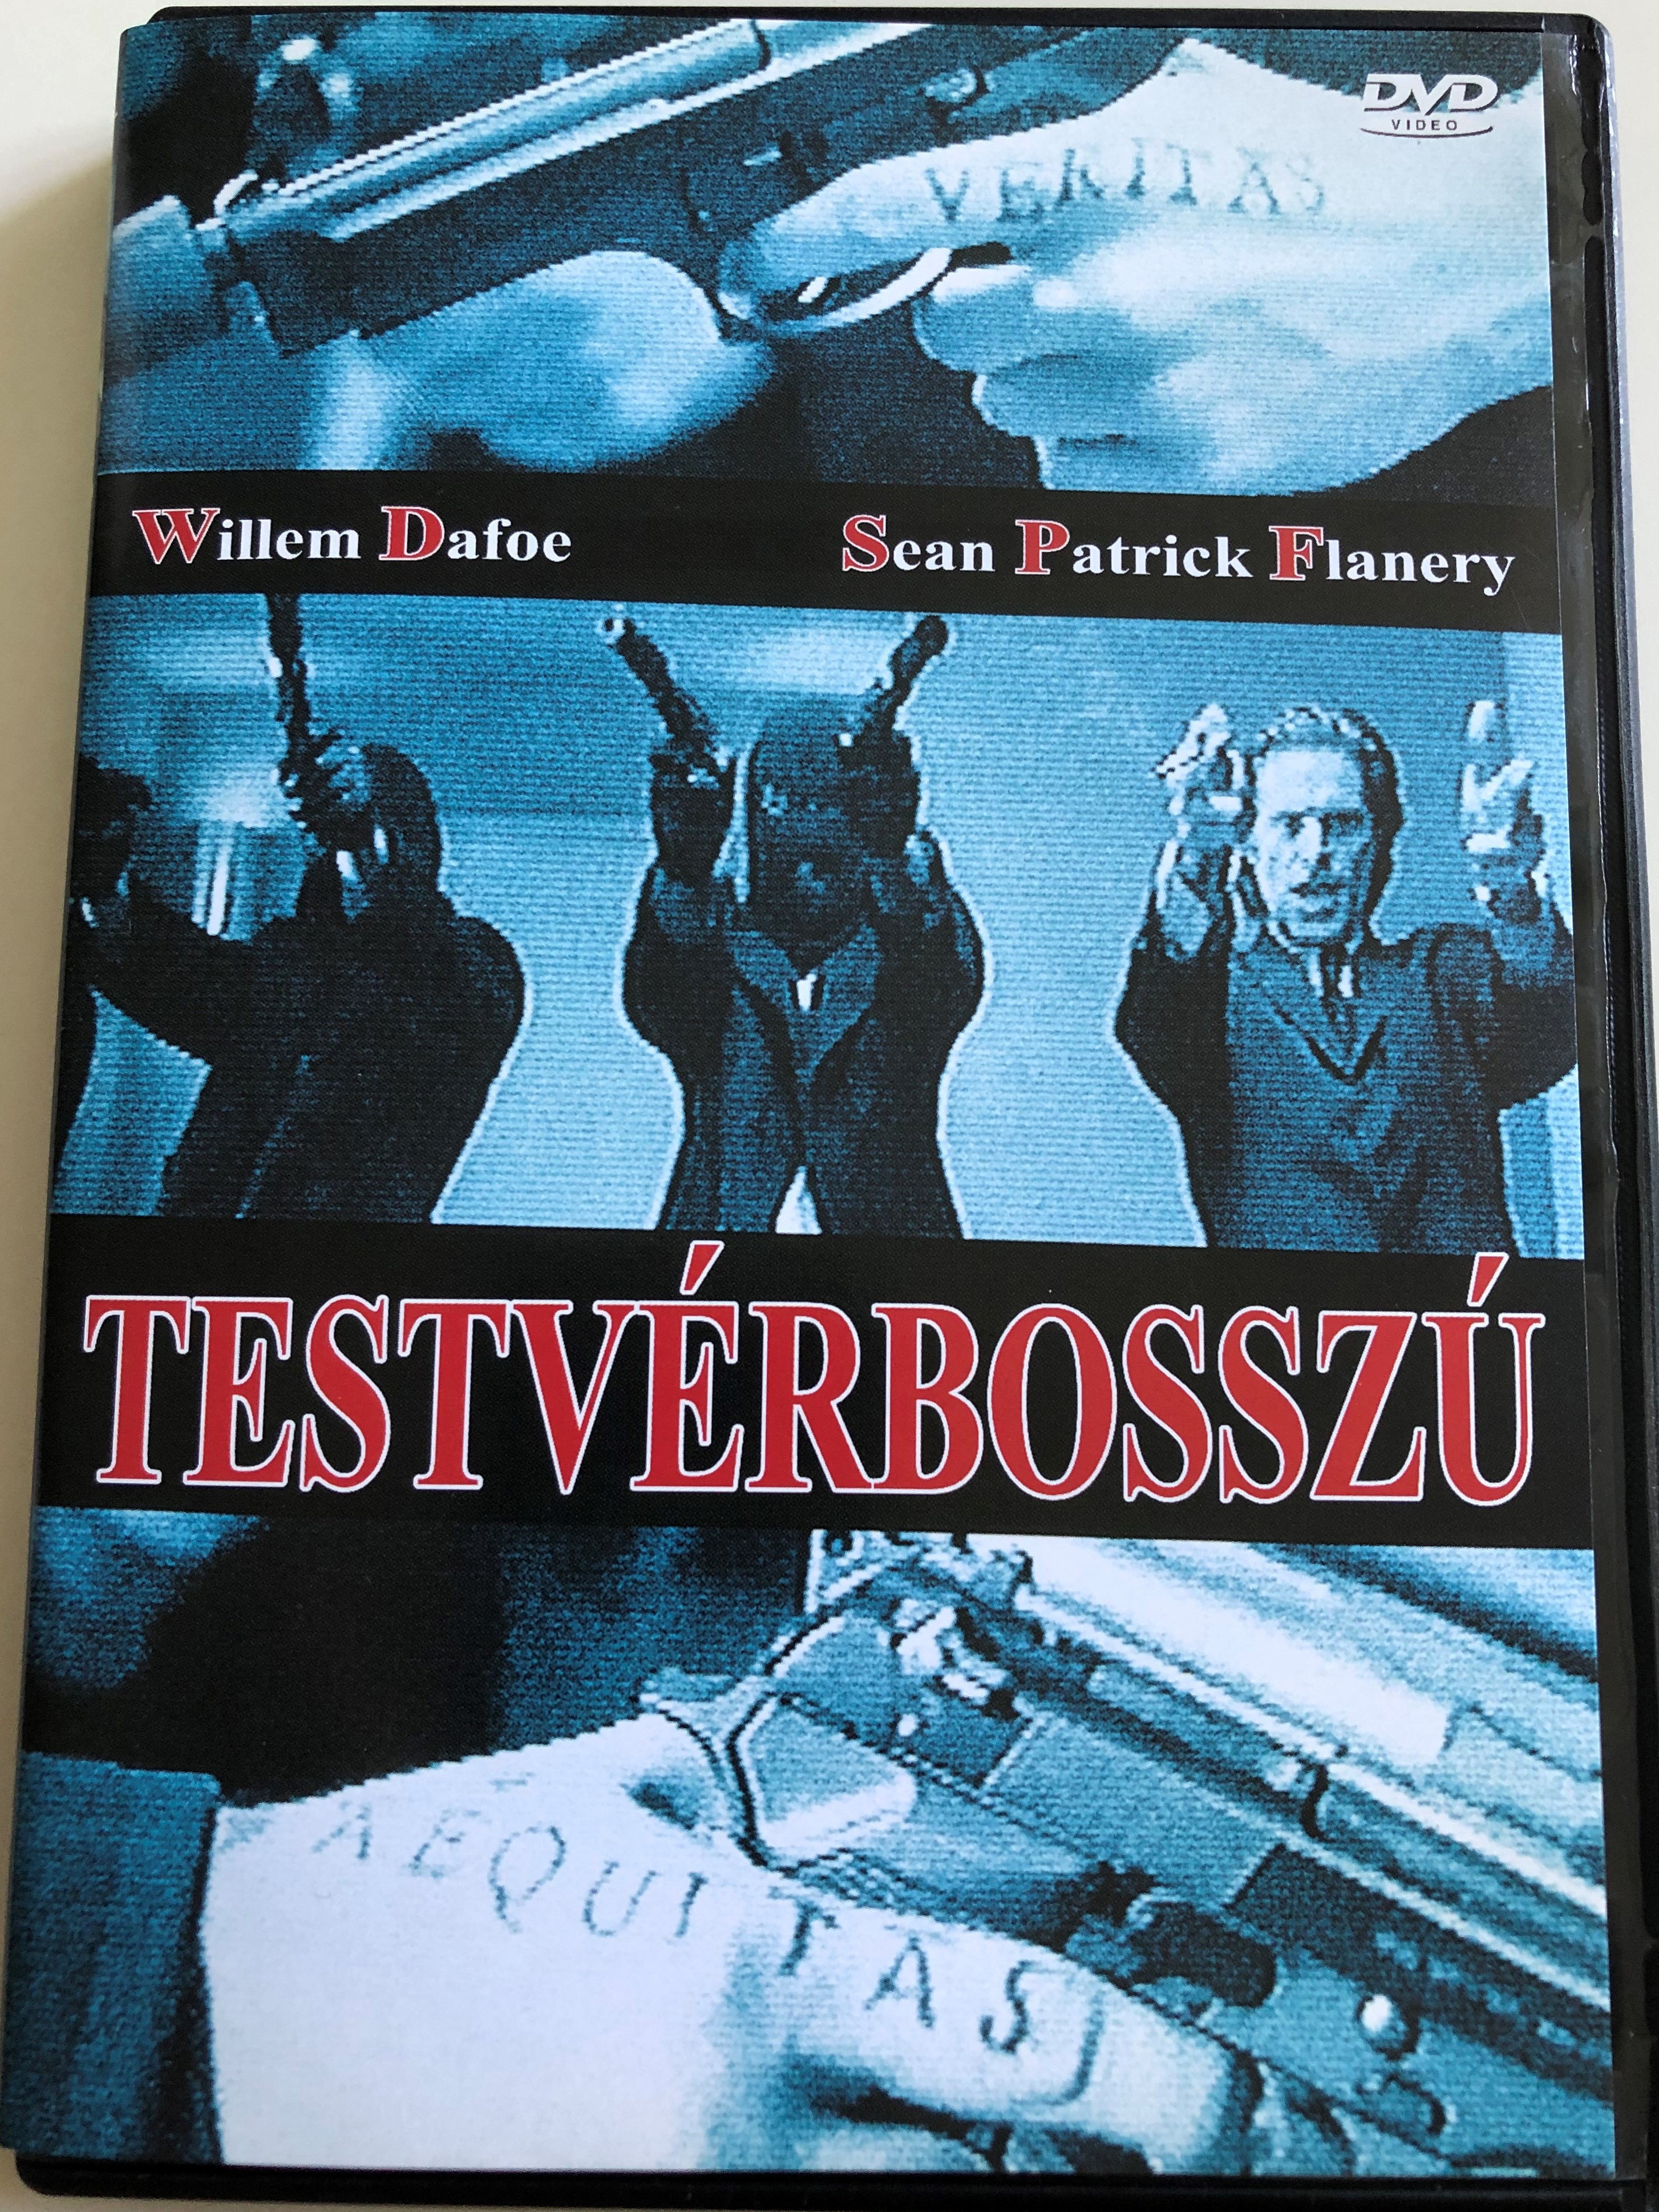 the-bondock-saints-dvd-1999-testv-rbossz-directed-by-troy-duffy-starring-willem-dafoe-sean-patrick-flanery-norman-reedus-david-della-rocco-billy-connolly-1-.jpg